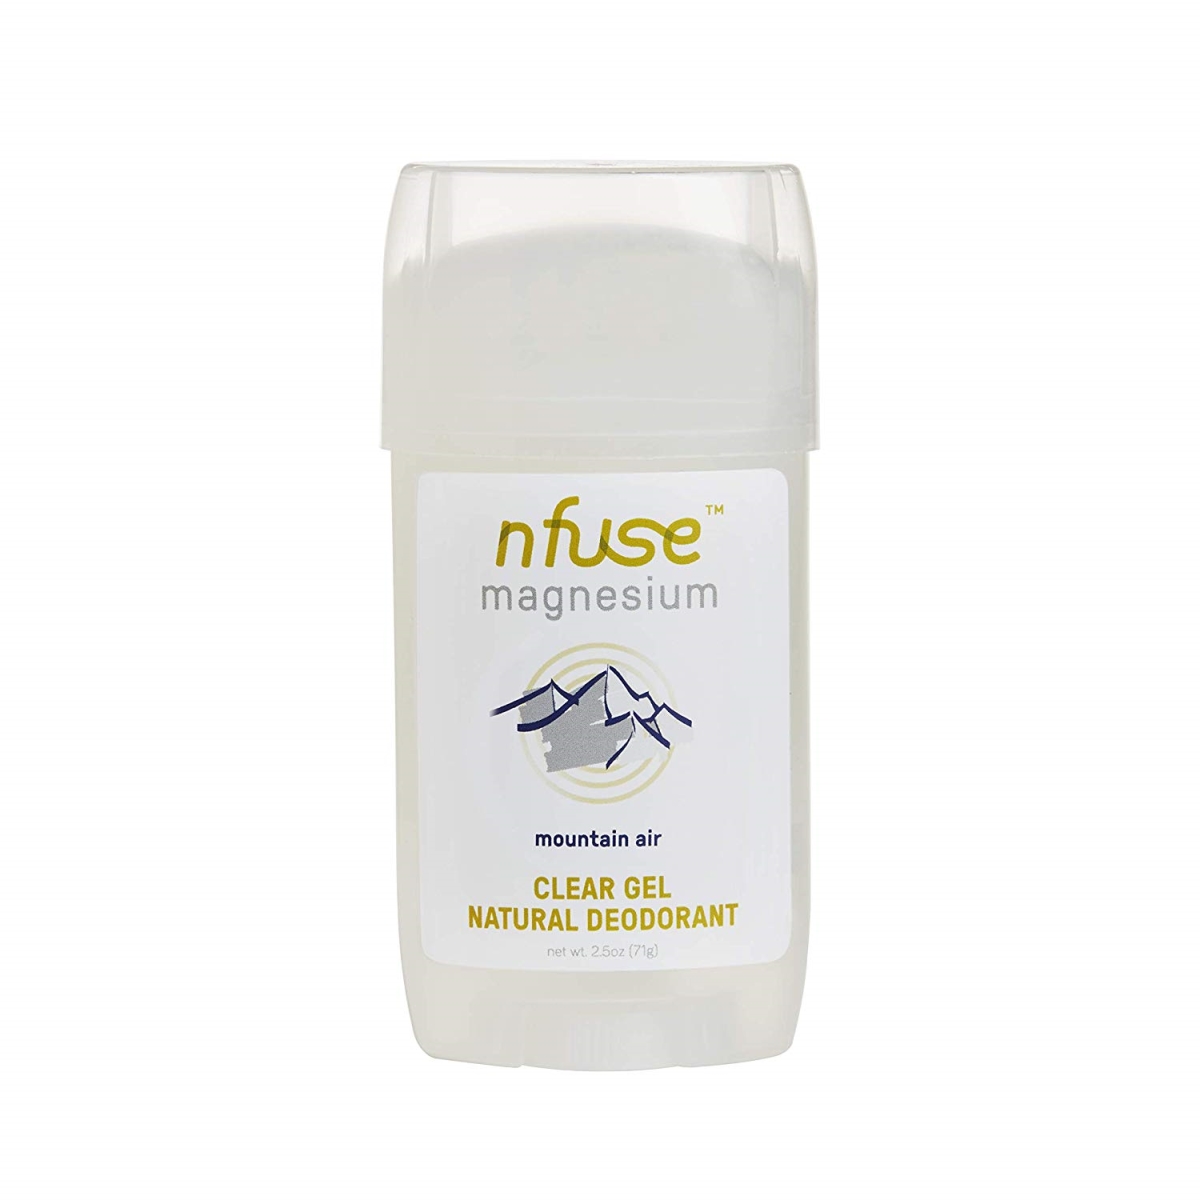 242132 2.5 Oz Magnesium Natural Clear Gel Deodorant, Mountain Air